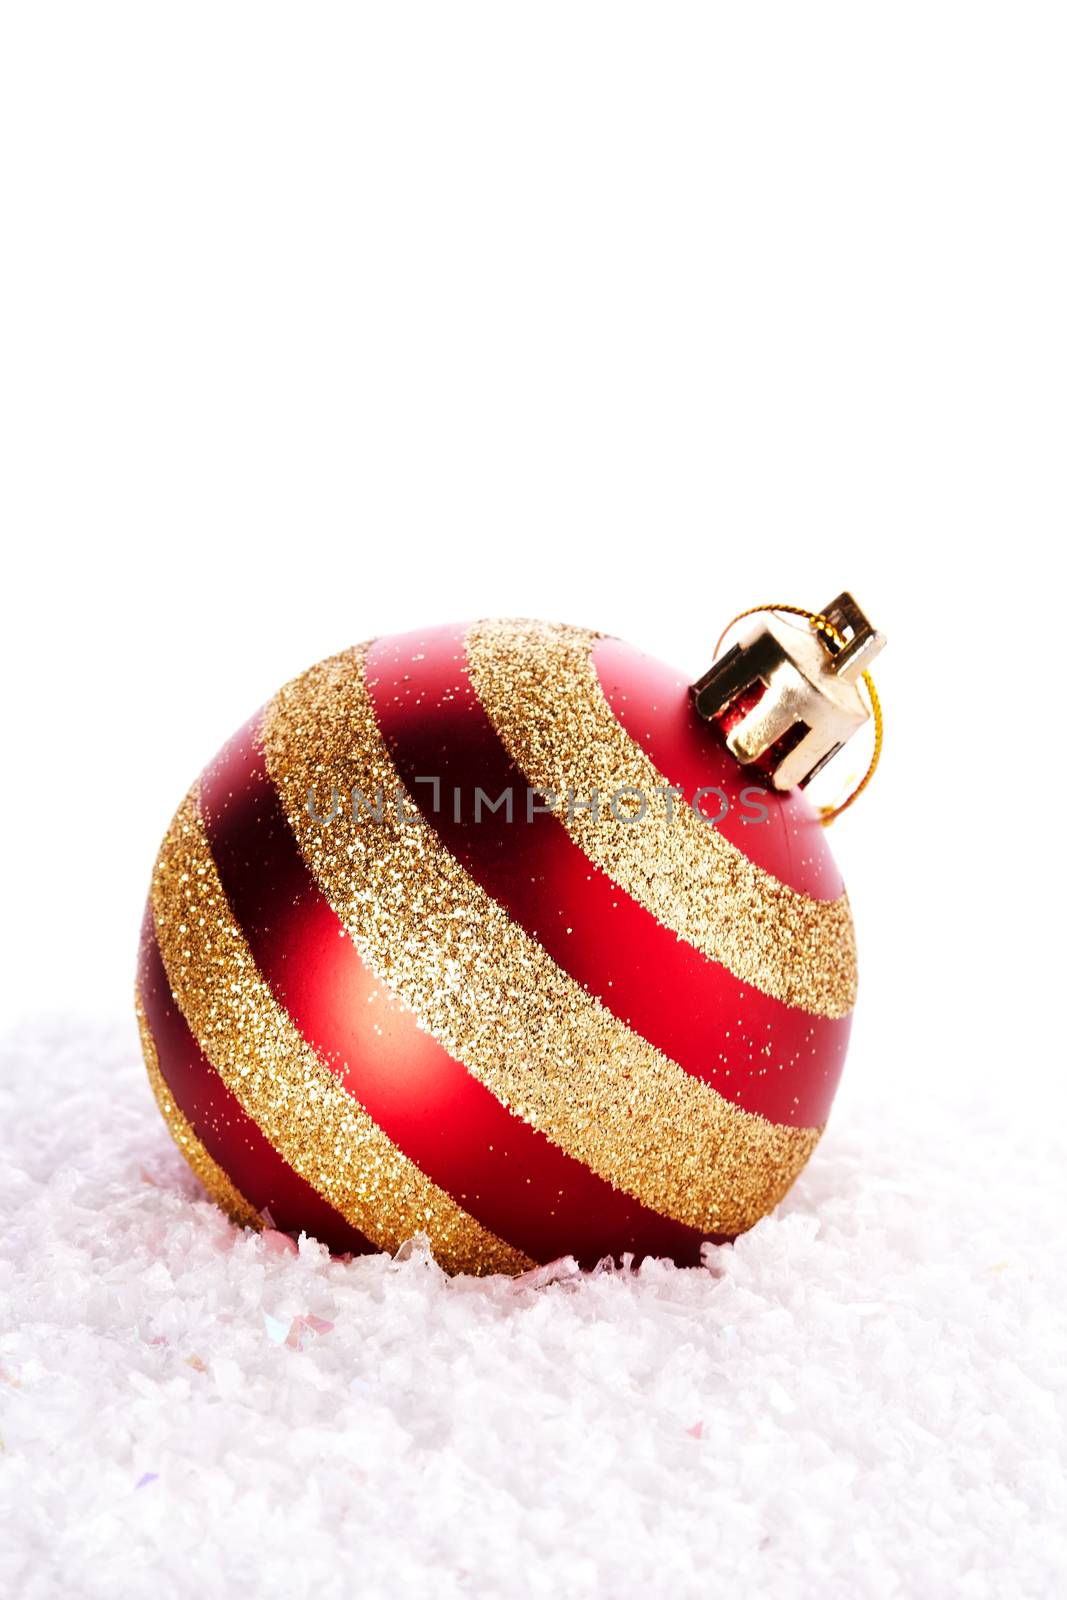 New Year's striped ball on snow. by Azaliya